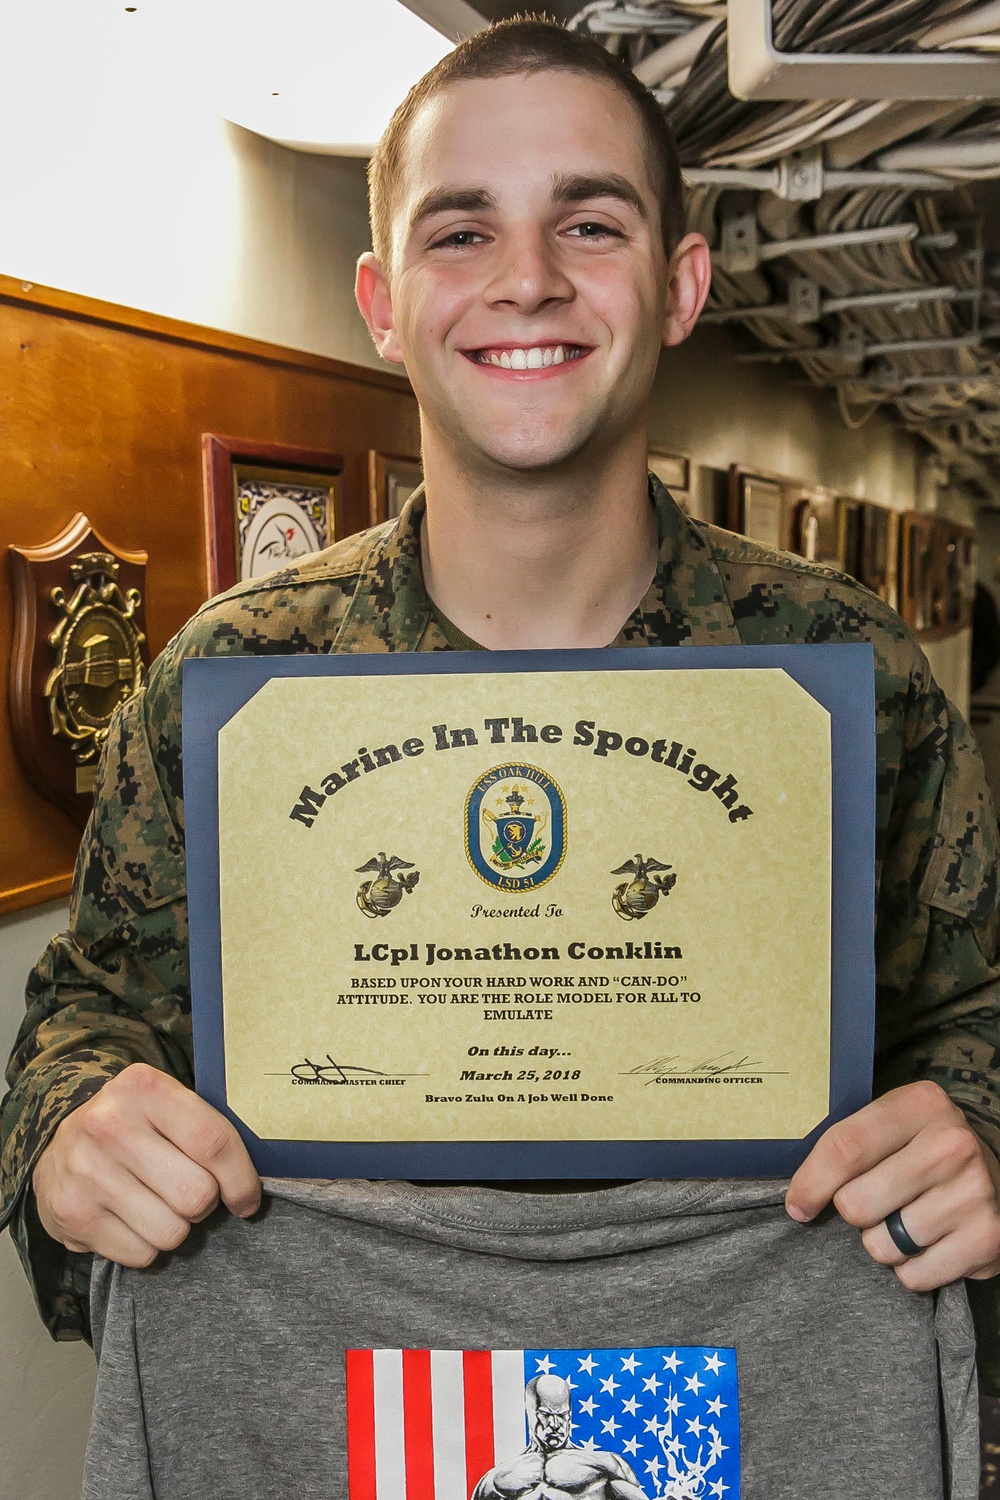 DVIDS Images Arkansas Native Receives Marine in the Spotlight Award